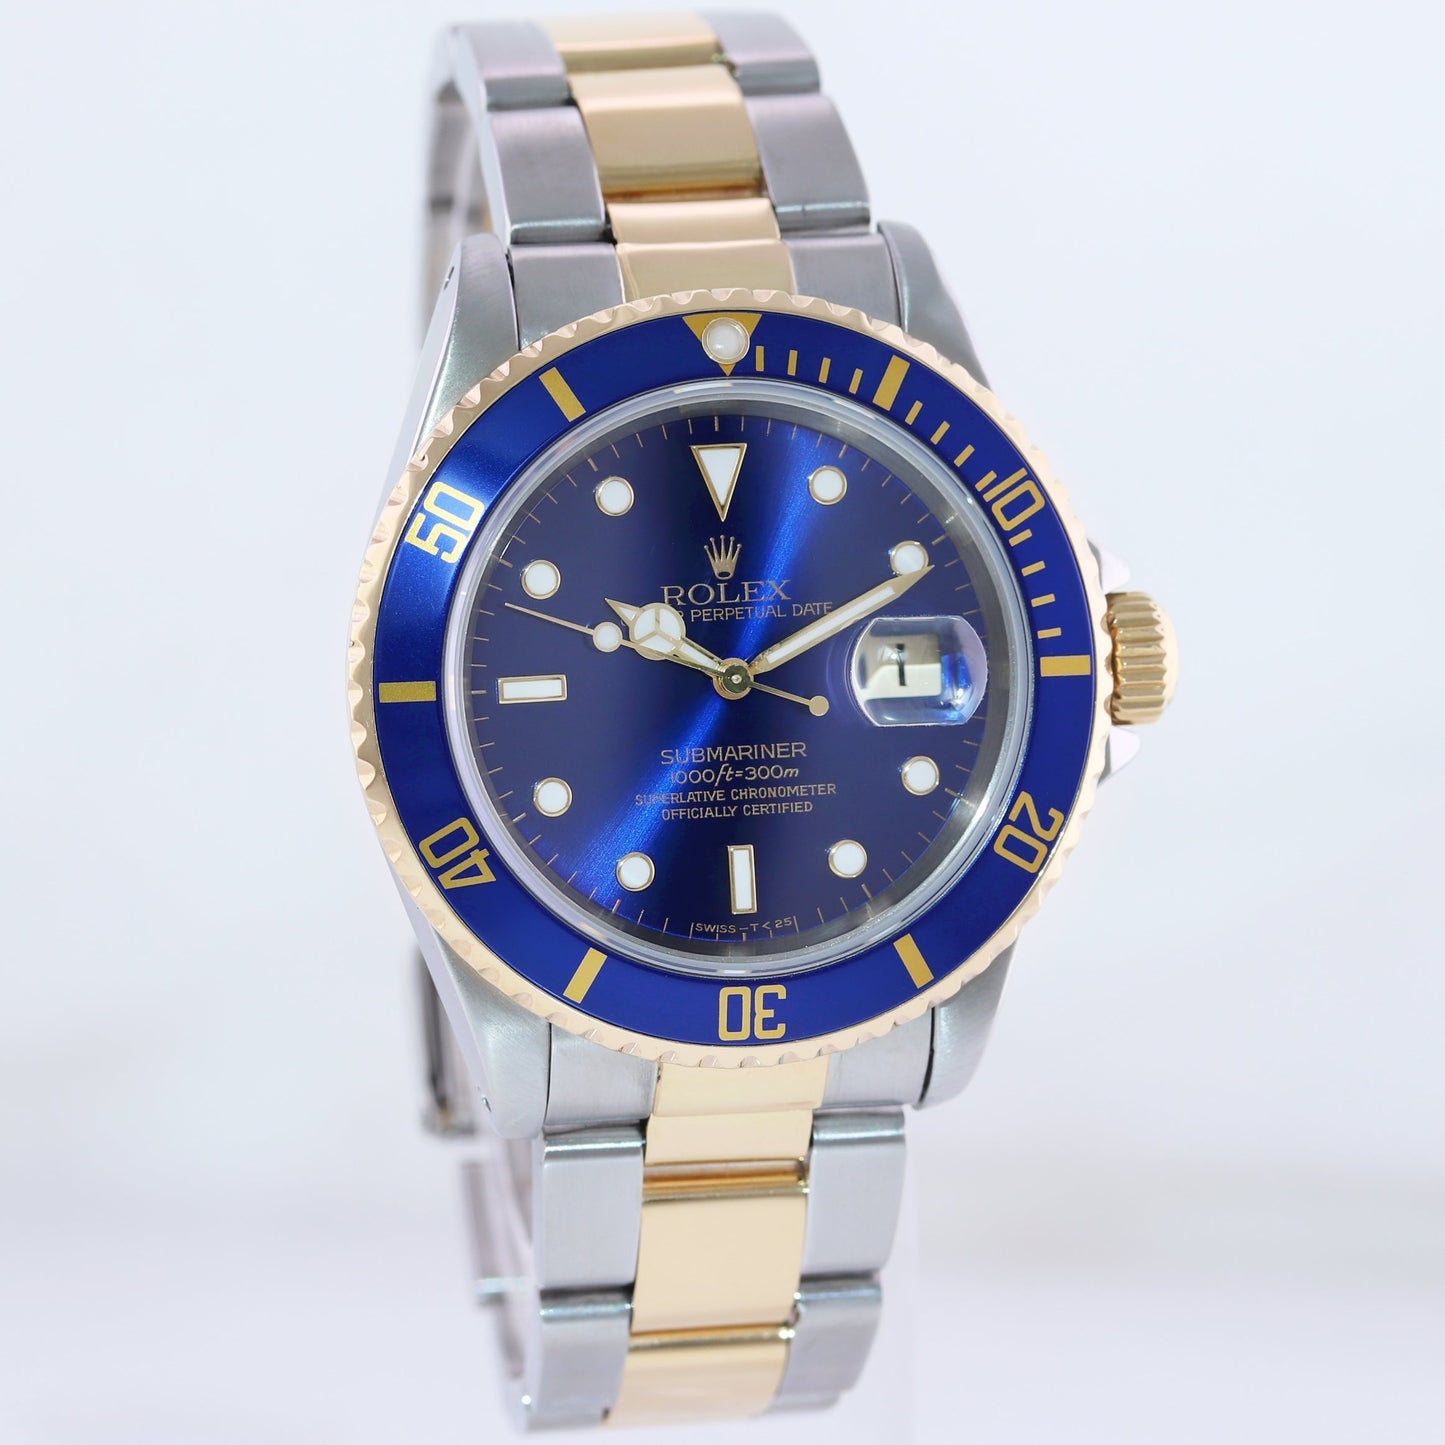 MINT Rolex Submariner 16613 Gold Steel Two Tone Yellow Gold Sunburst Blue Watch